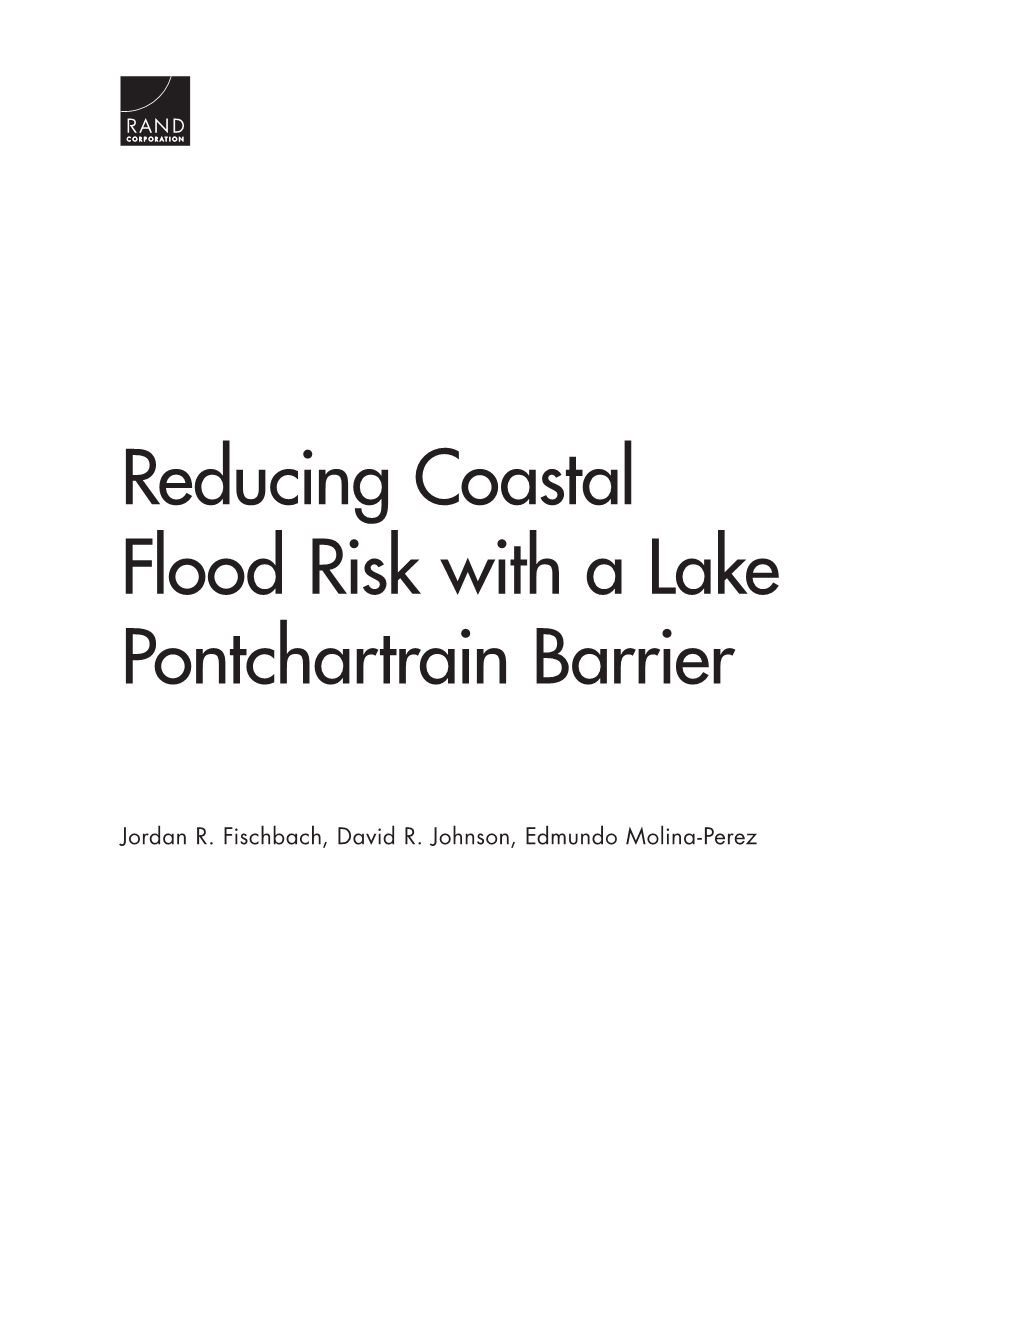 Reducing Coastal Flood Risk with a Lake Pontchartrain Barrier